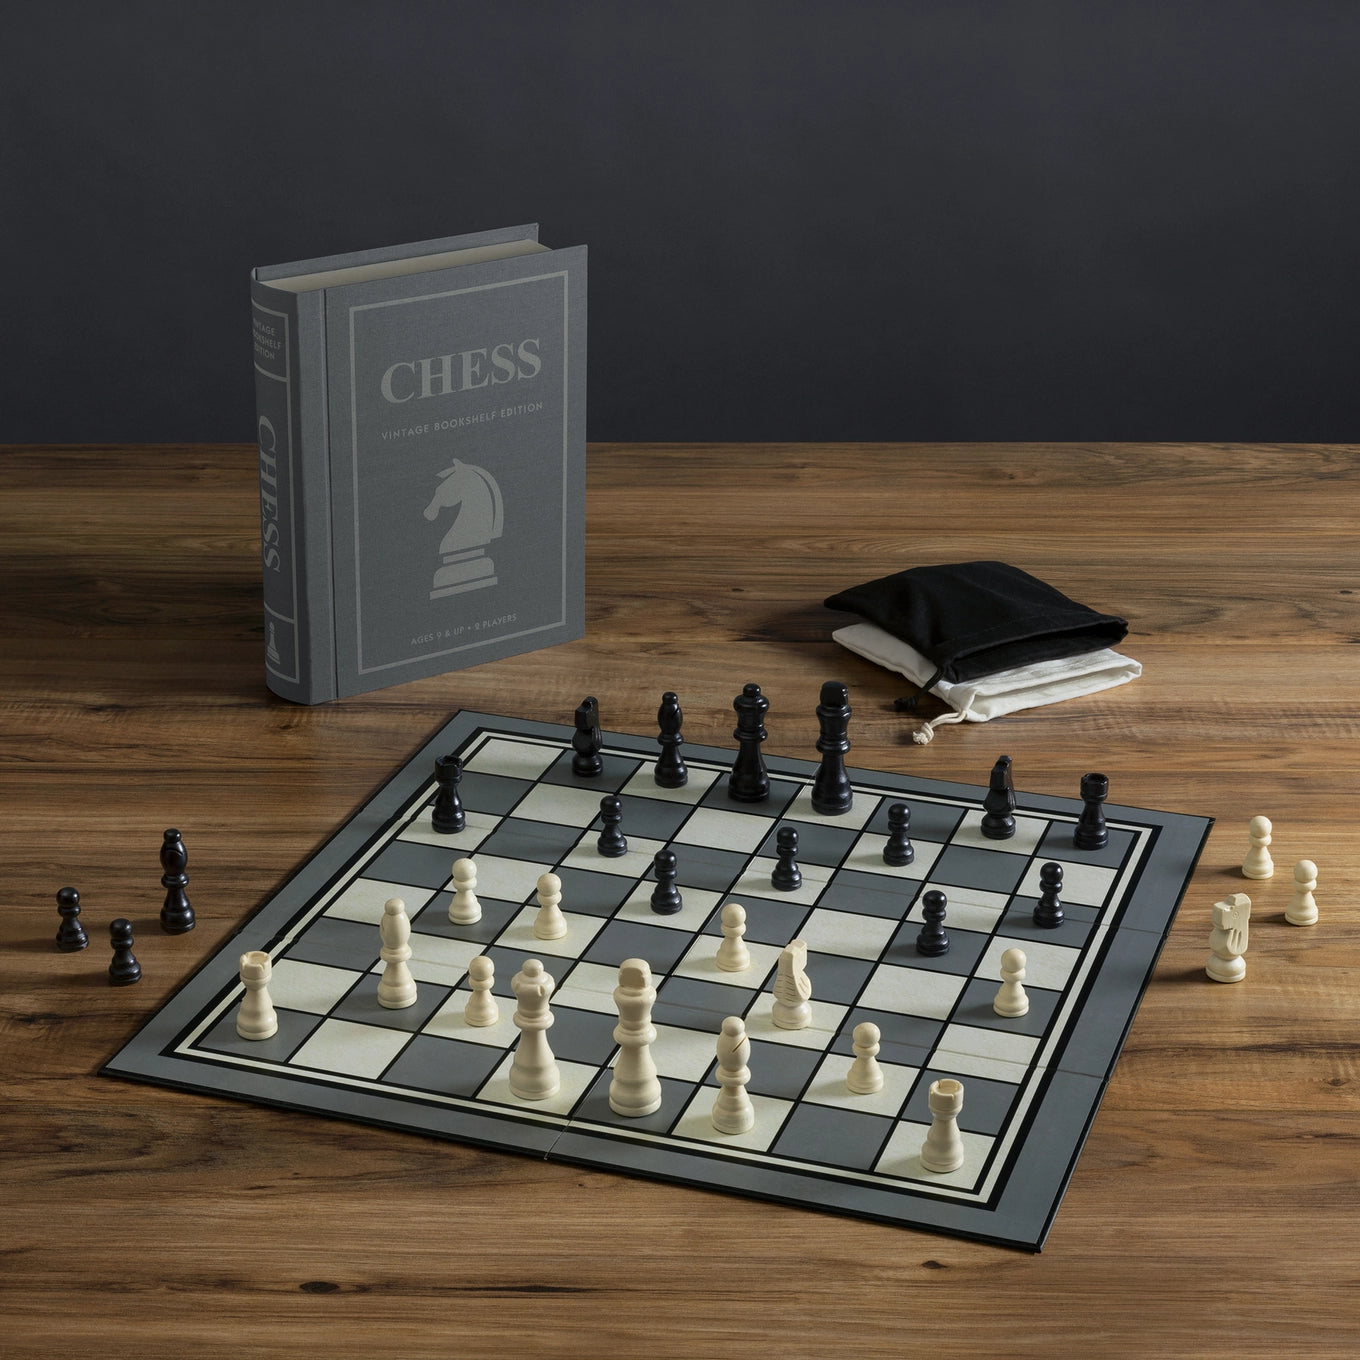 Chess Board Game Vintage Bookshelf Edition